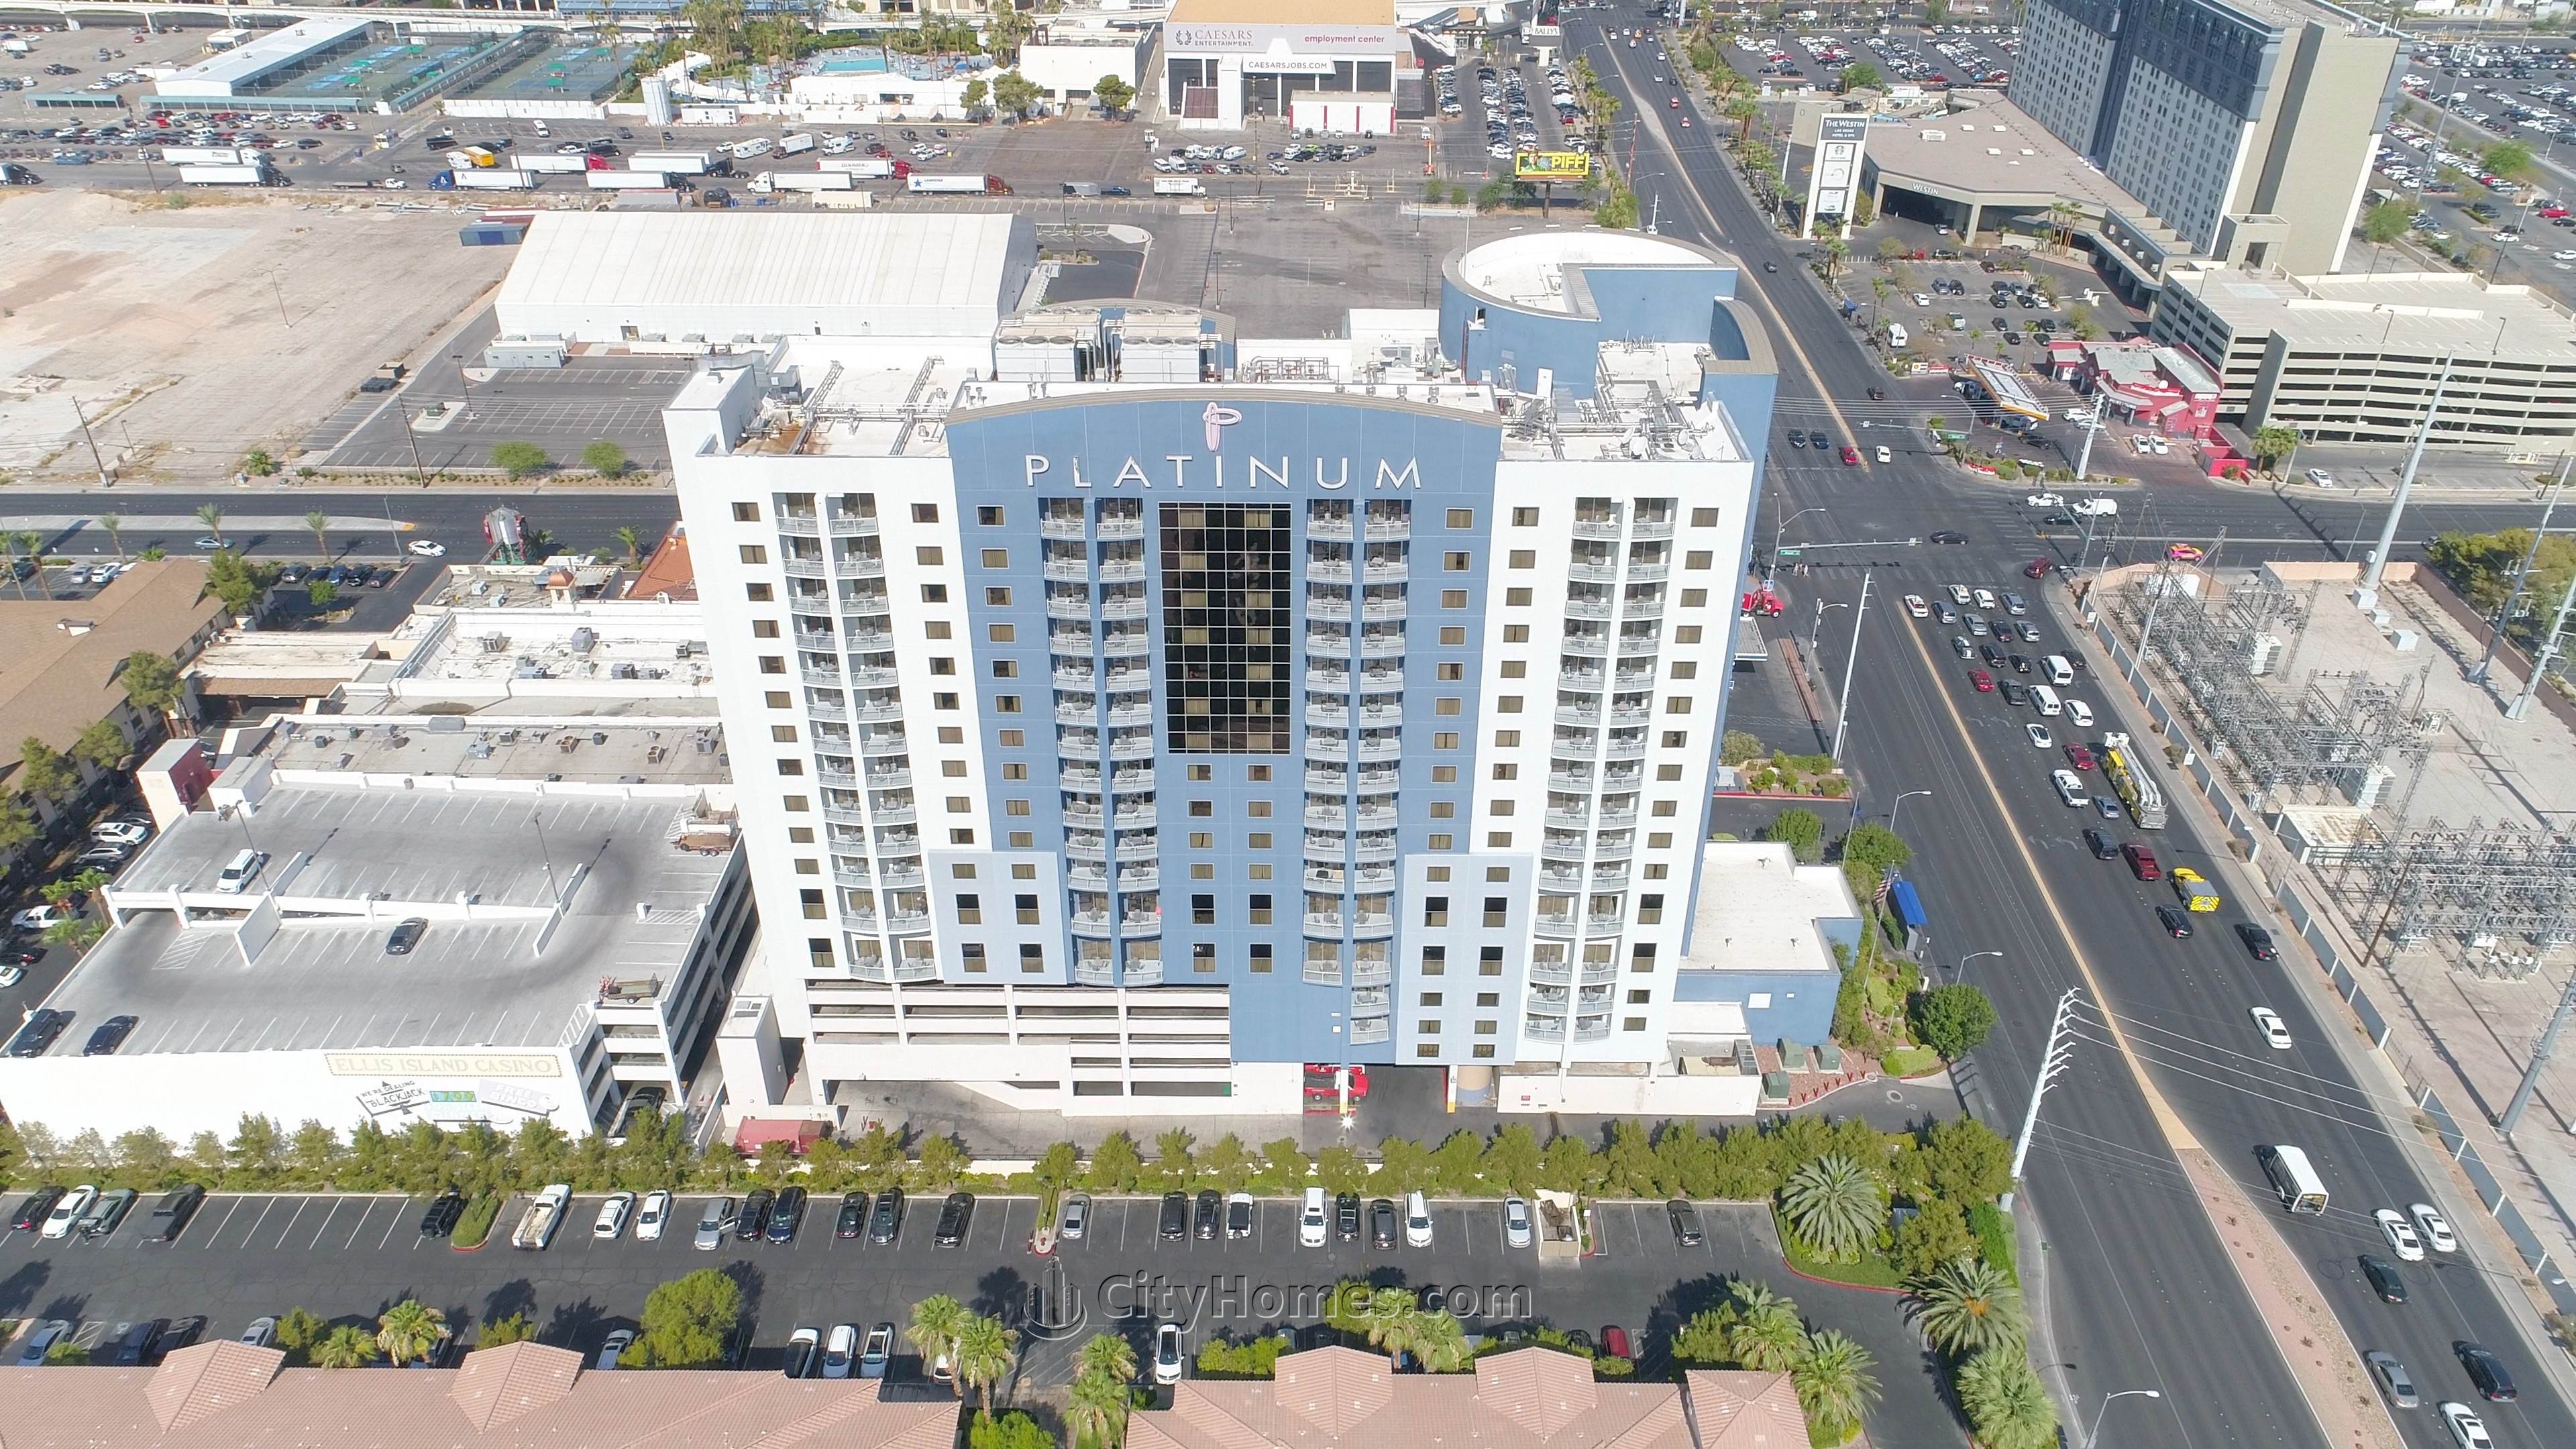 Platinum Resort building at 211 E Flamingo Road, Paradise, Las Vegas, NV 89169